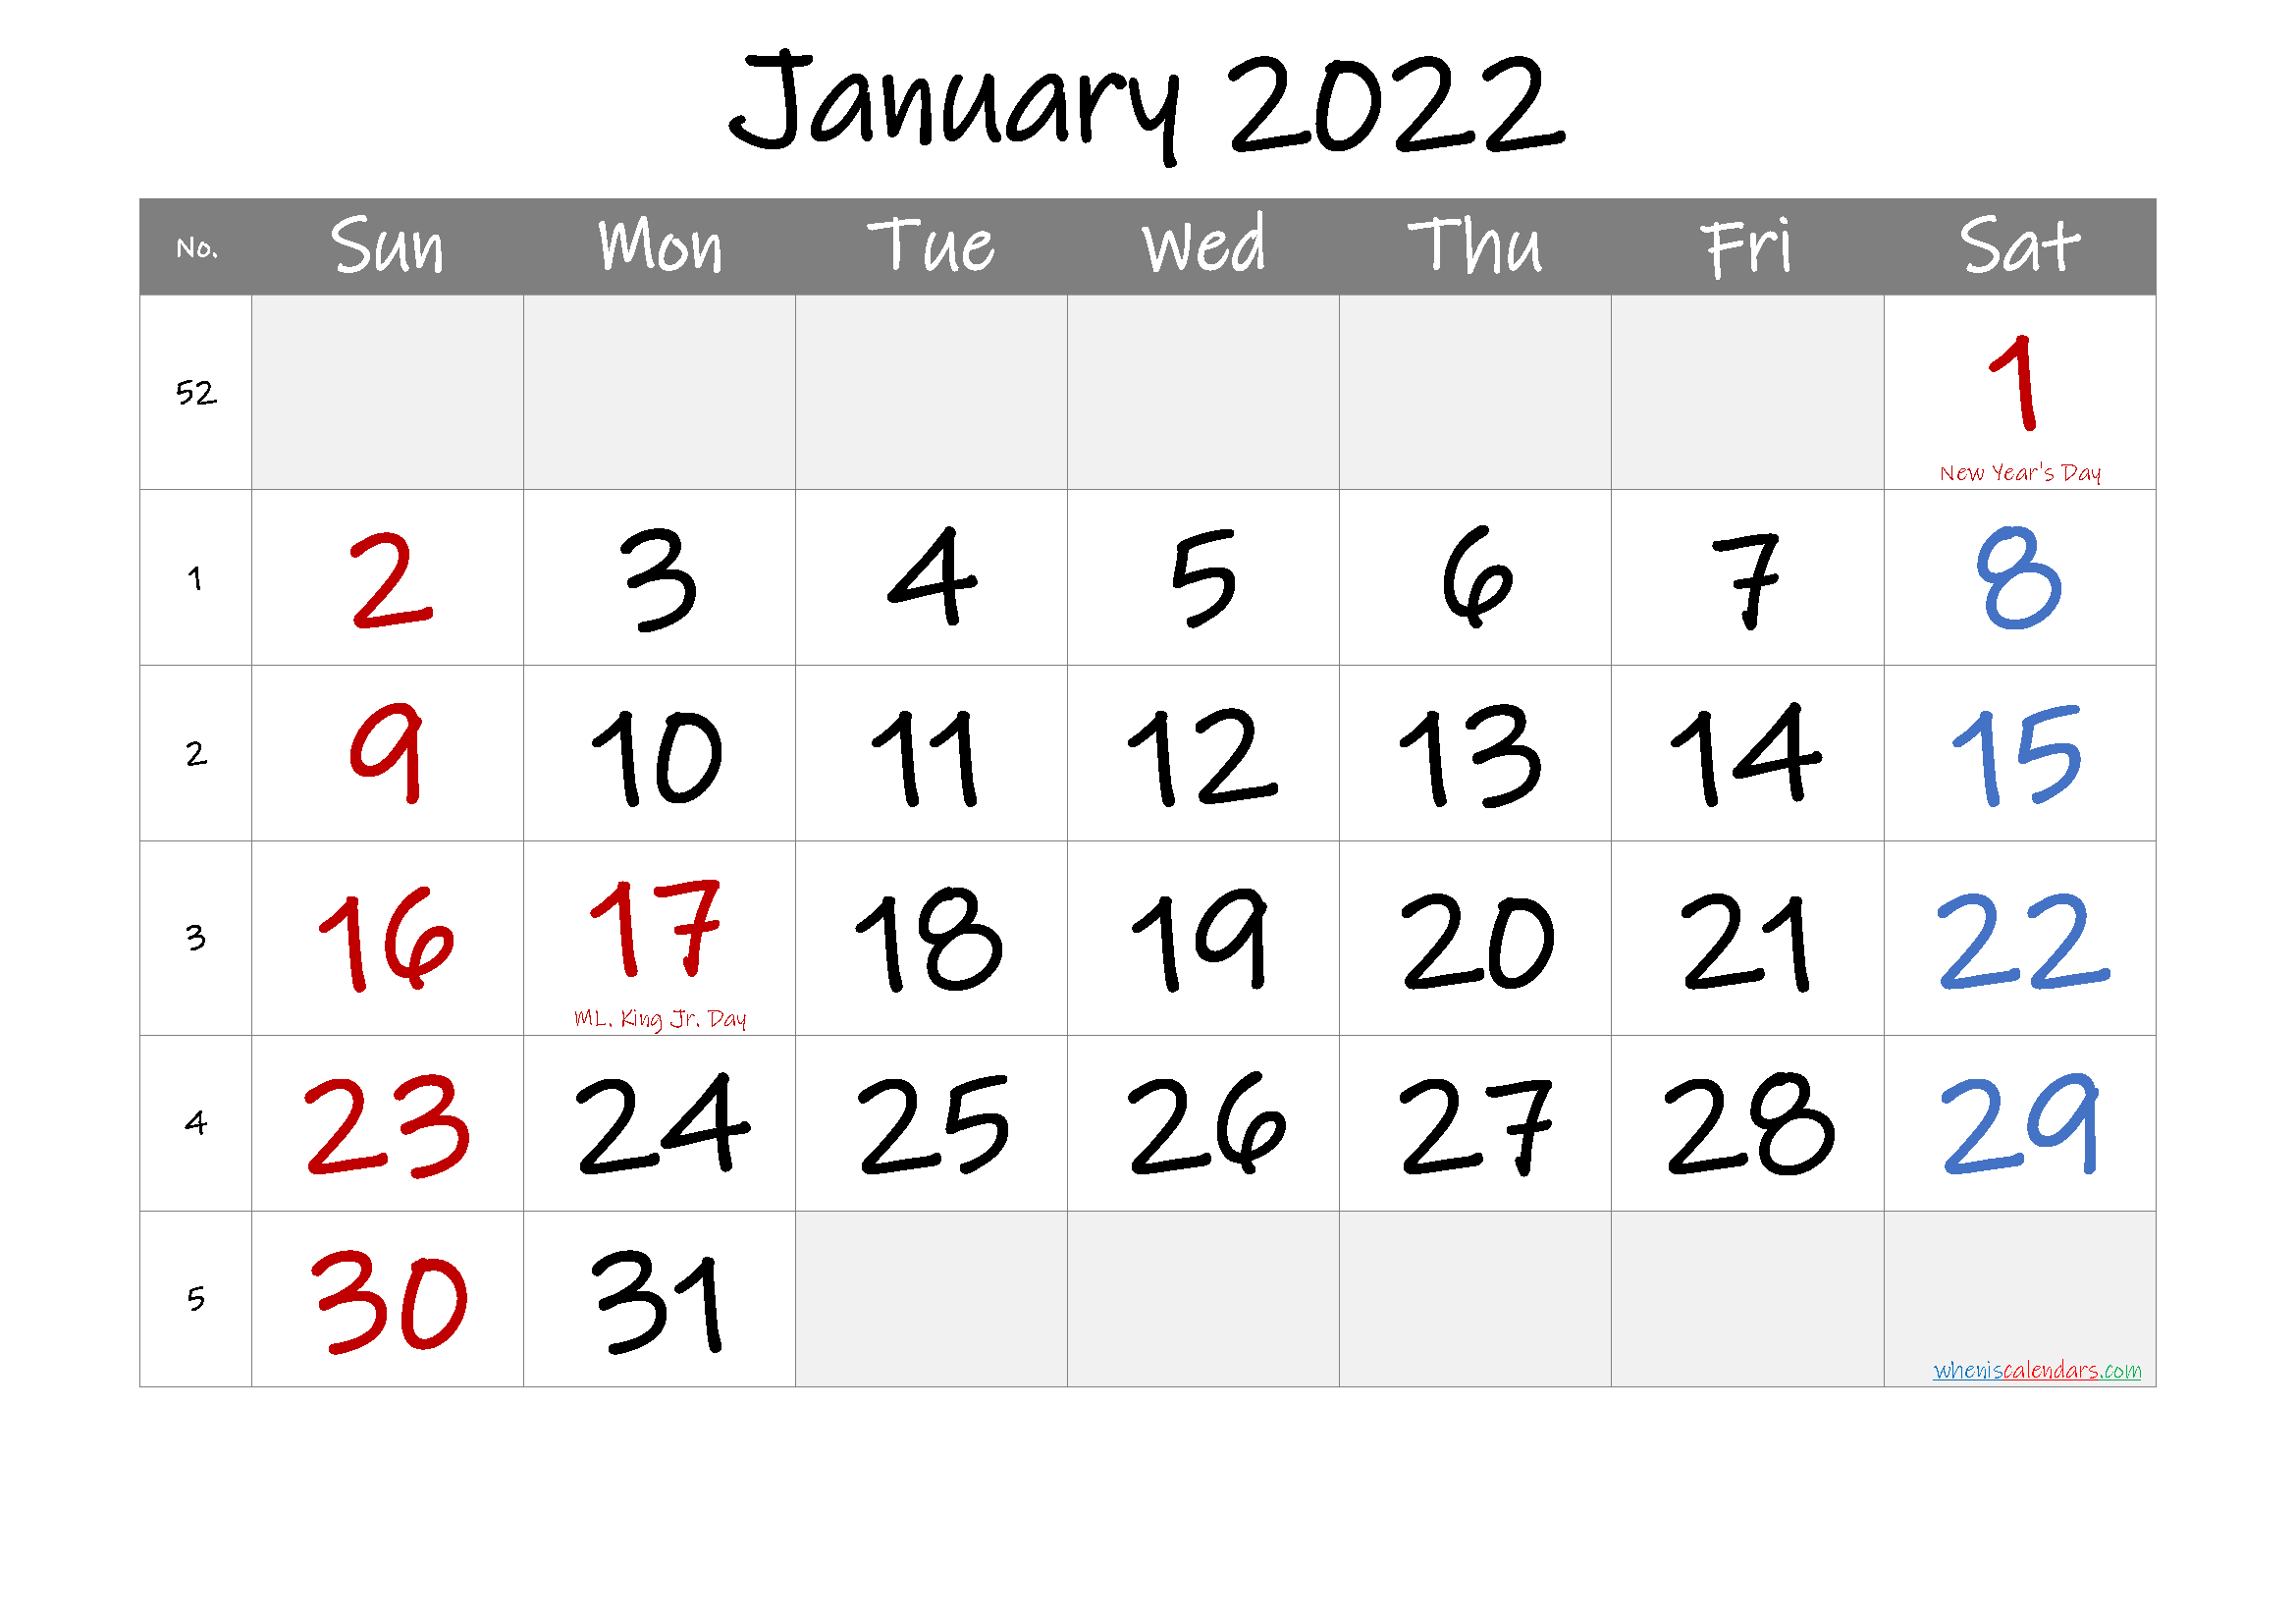 January 2022 Calendar Free Sample Avnitasoni